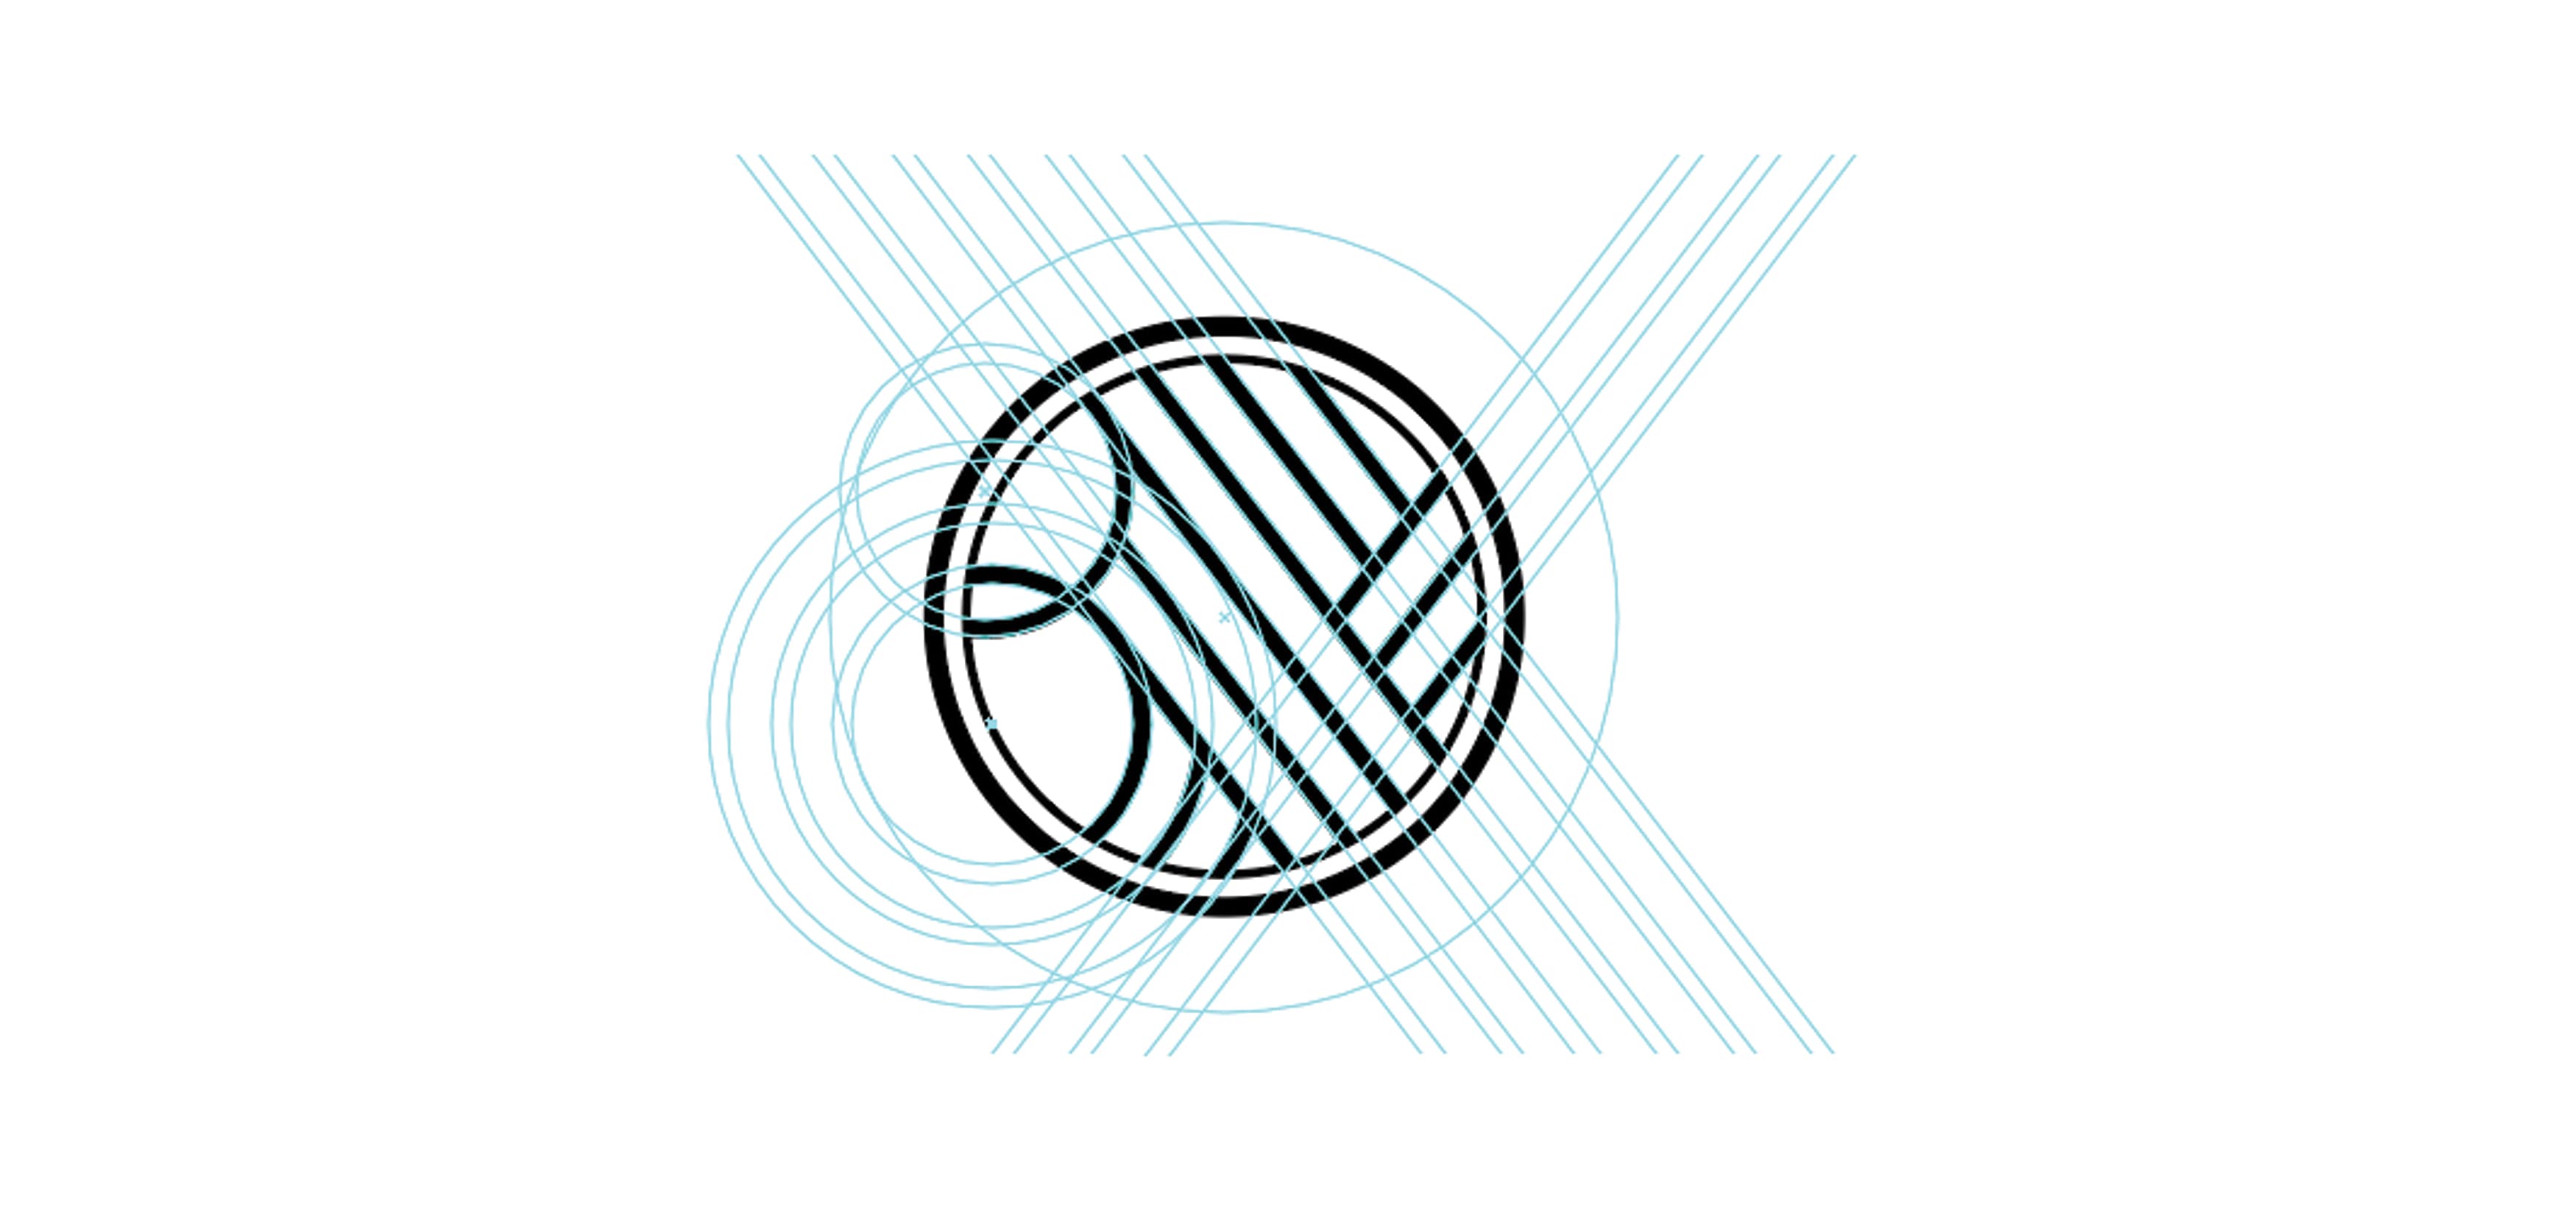 Image illustrating the geometric construction of the Biovista icon logo.